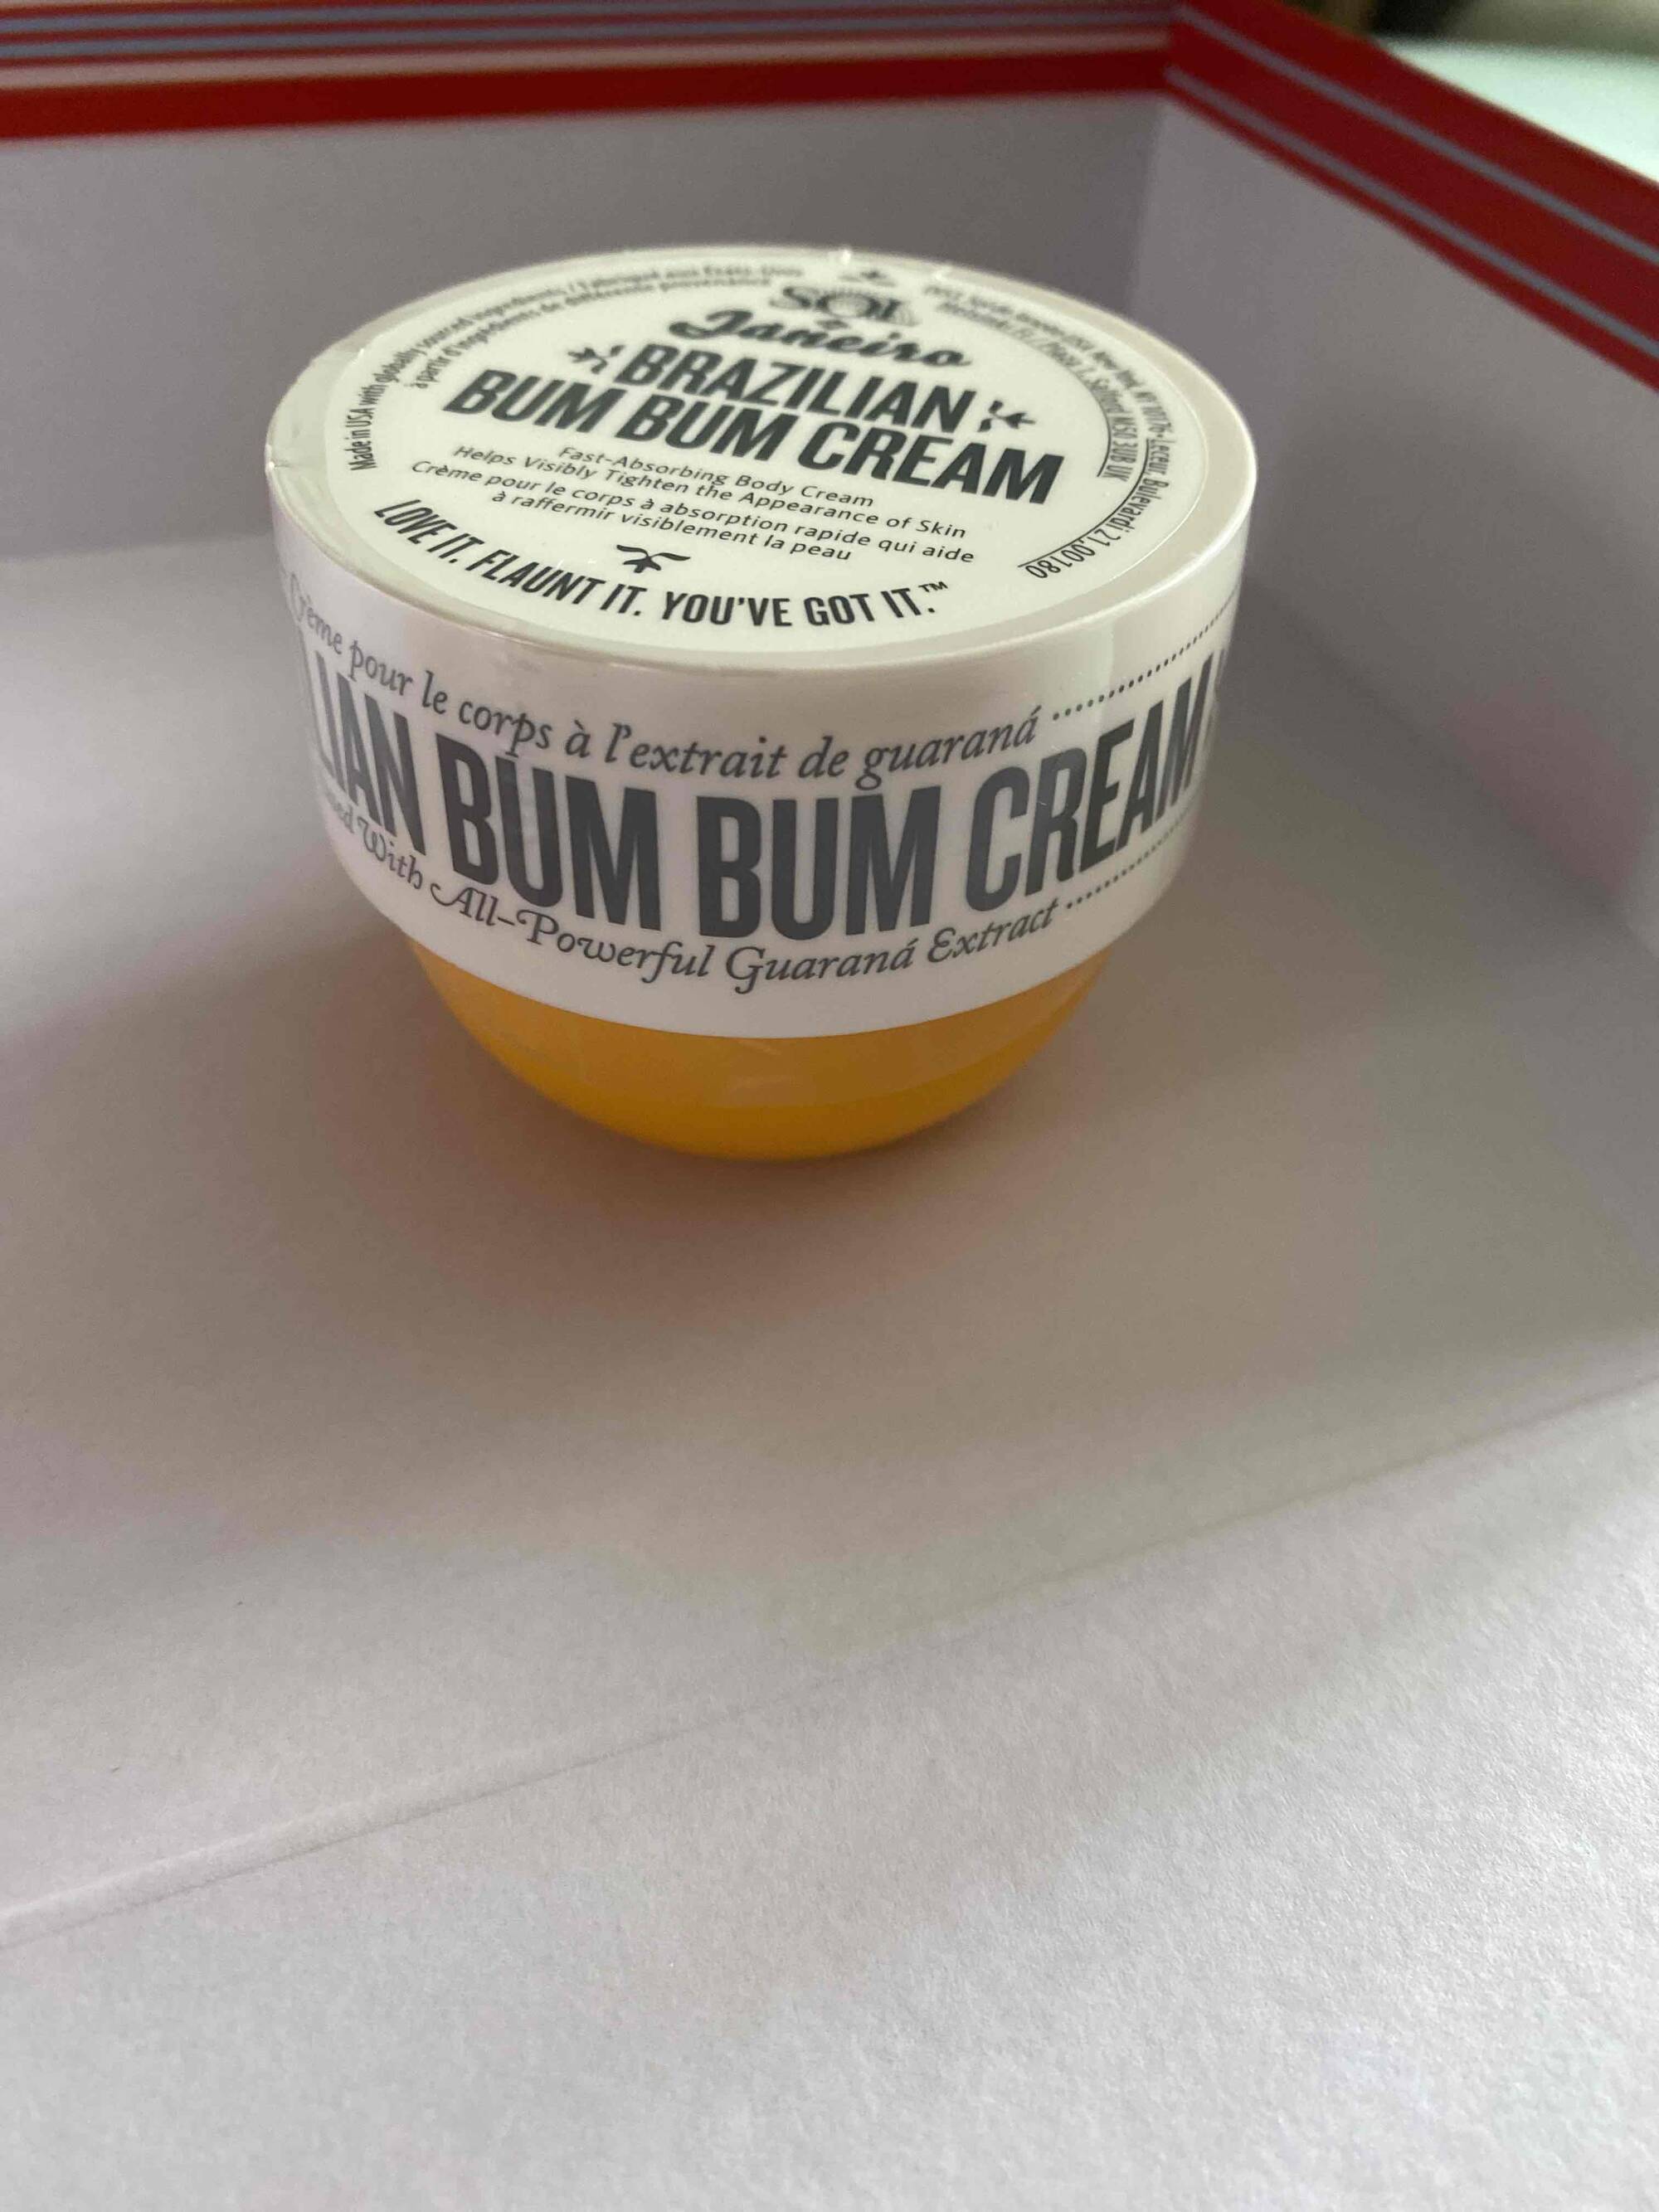 SOL DE JANEIRO - Brazilian Bum Bum cream